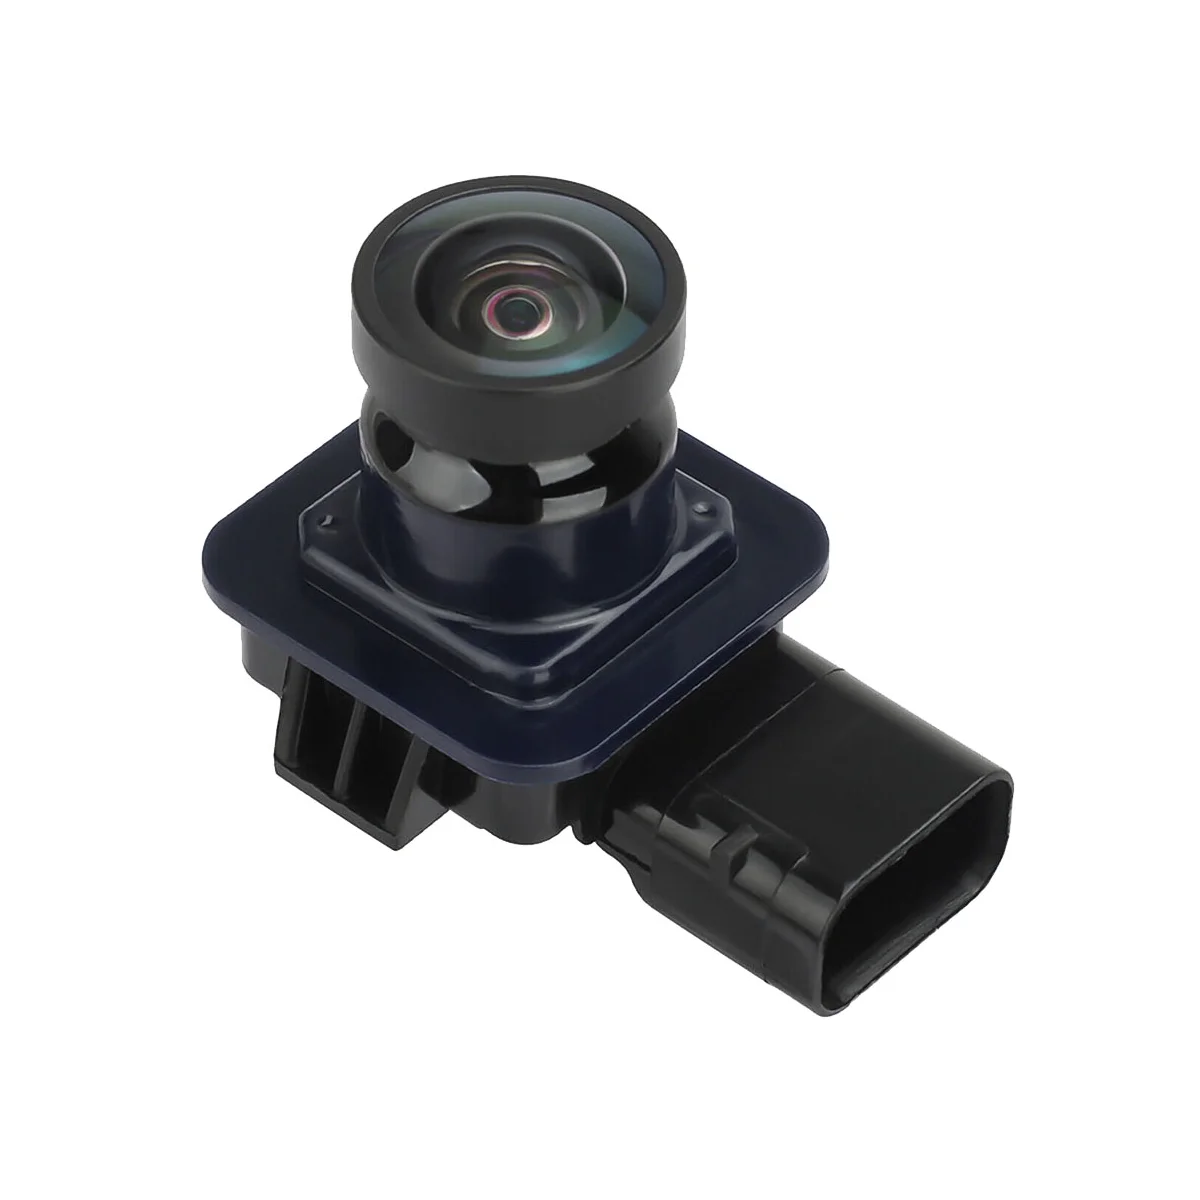 

EJ5Z19G490A New Rear View Reverse Camera Backup Camera for Ford Escape